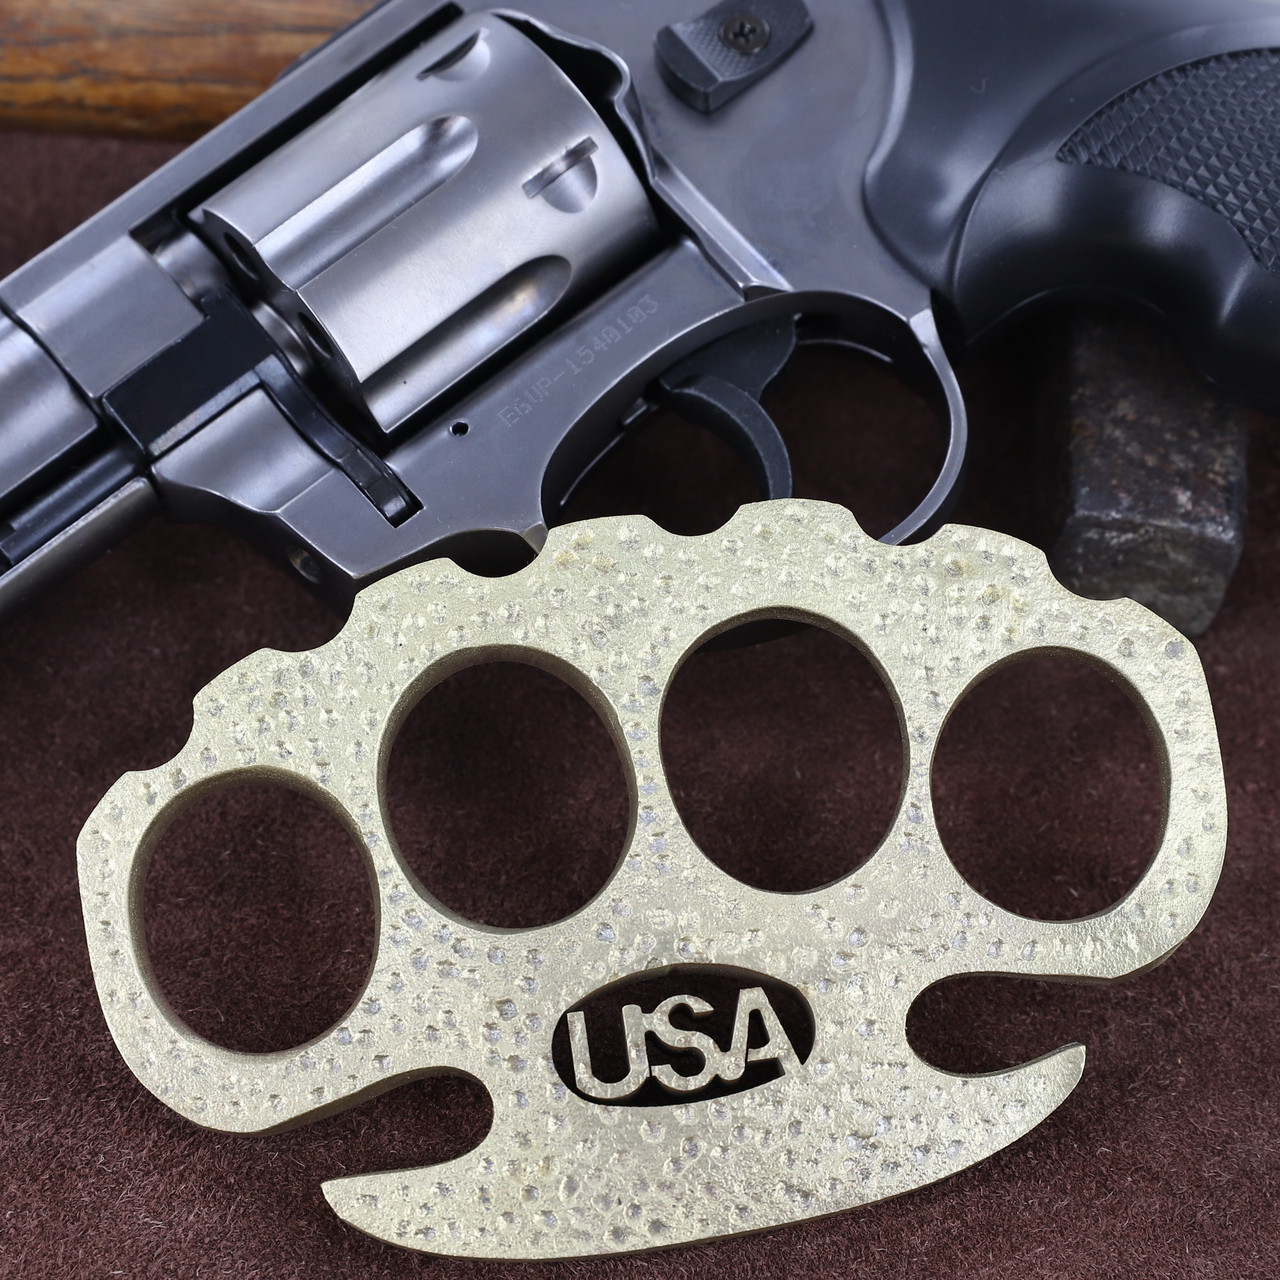 Buy Stun Gun Knuckle IDO2 with Flashlight online | Guard Dog Security